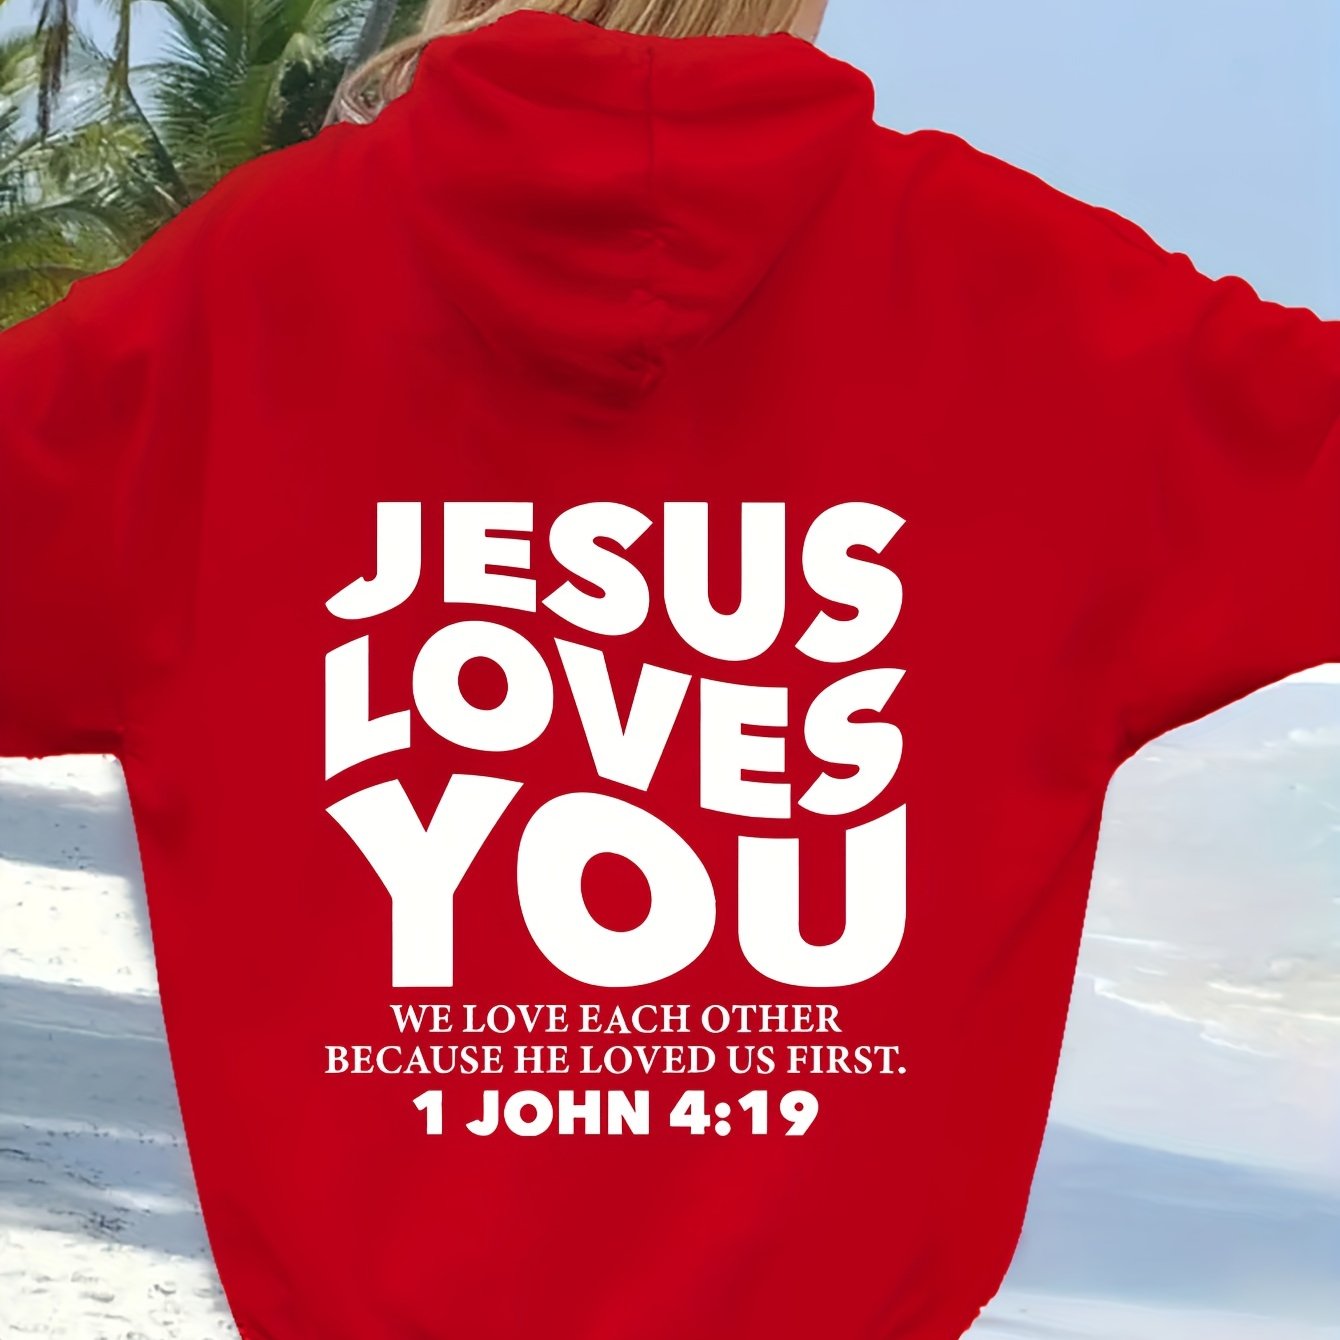 1 John 4:19 Jesus Loves You Plus Size Women's Christian Pullover Hooded Sweatshirt claimedbygoddesigns